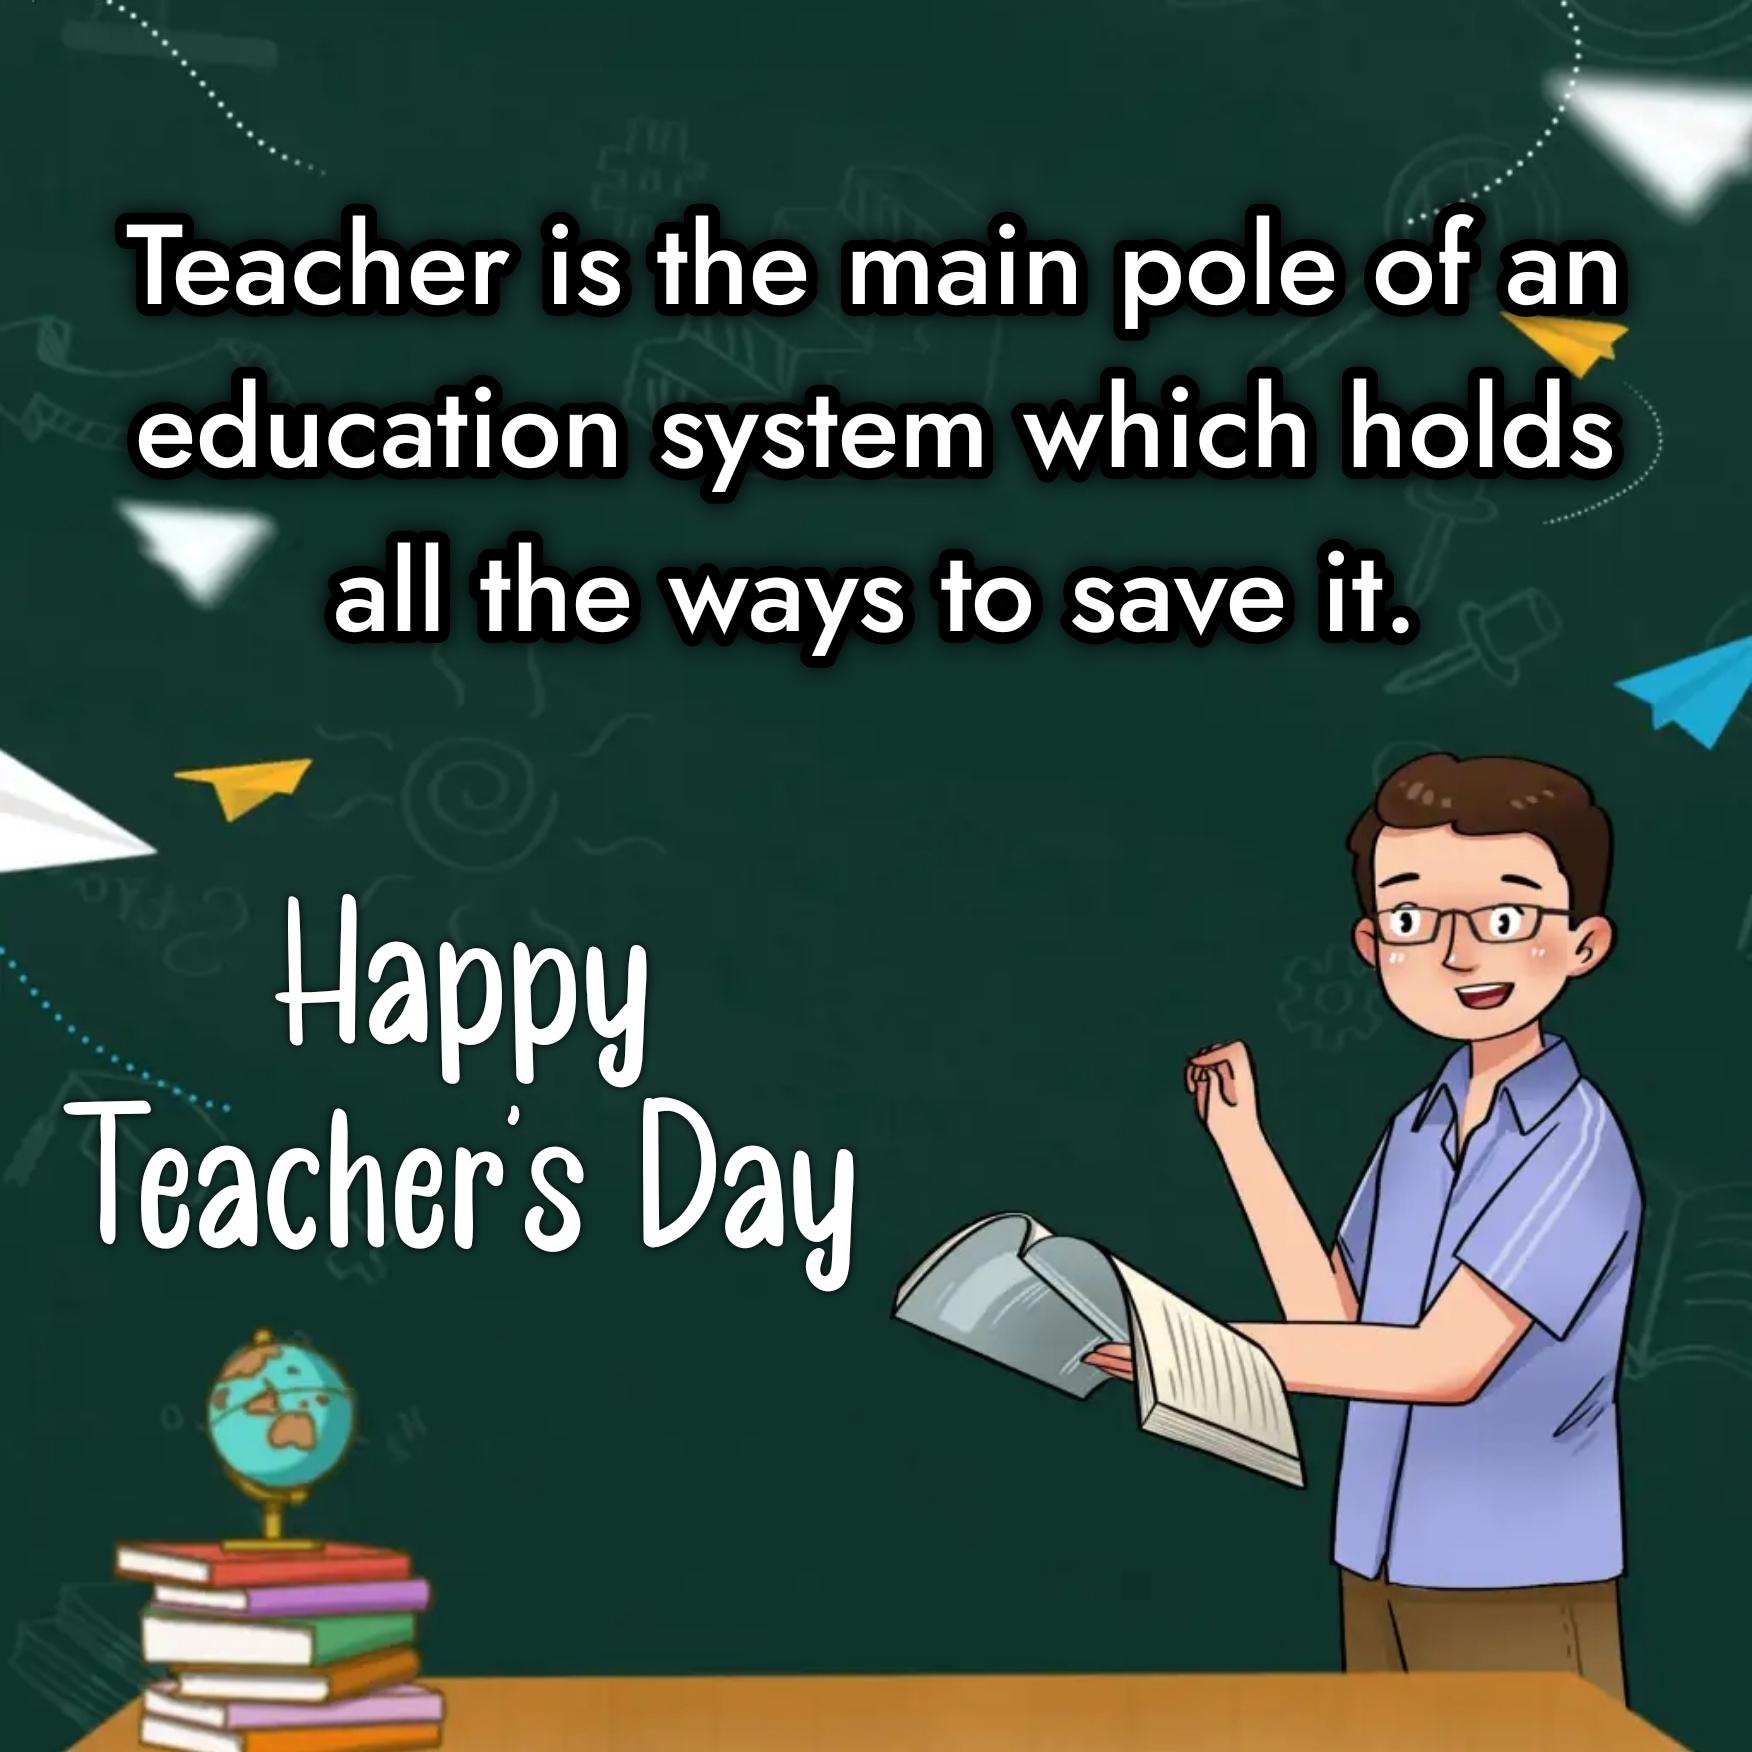 Teacher is the main pole of an education system